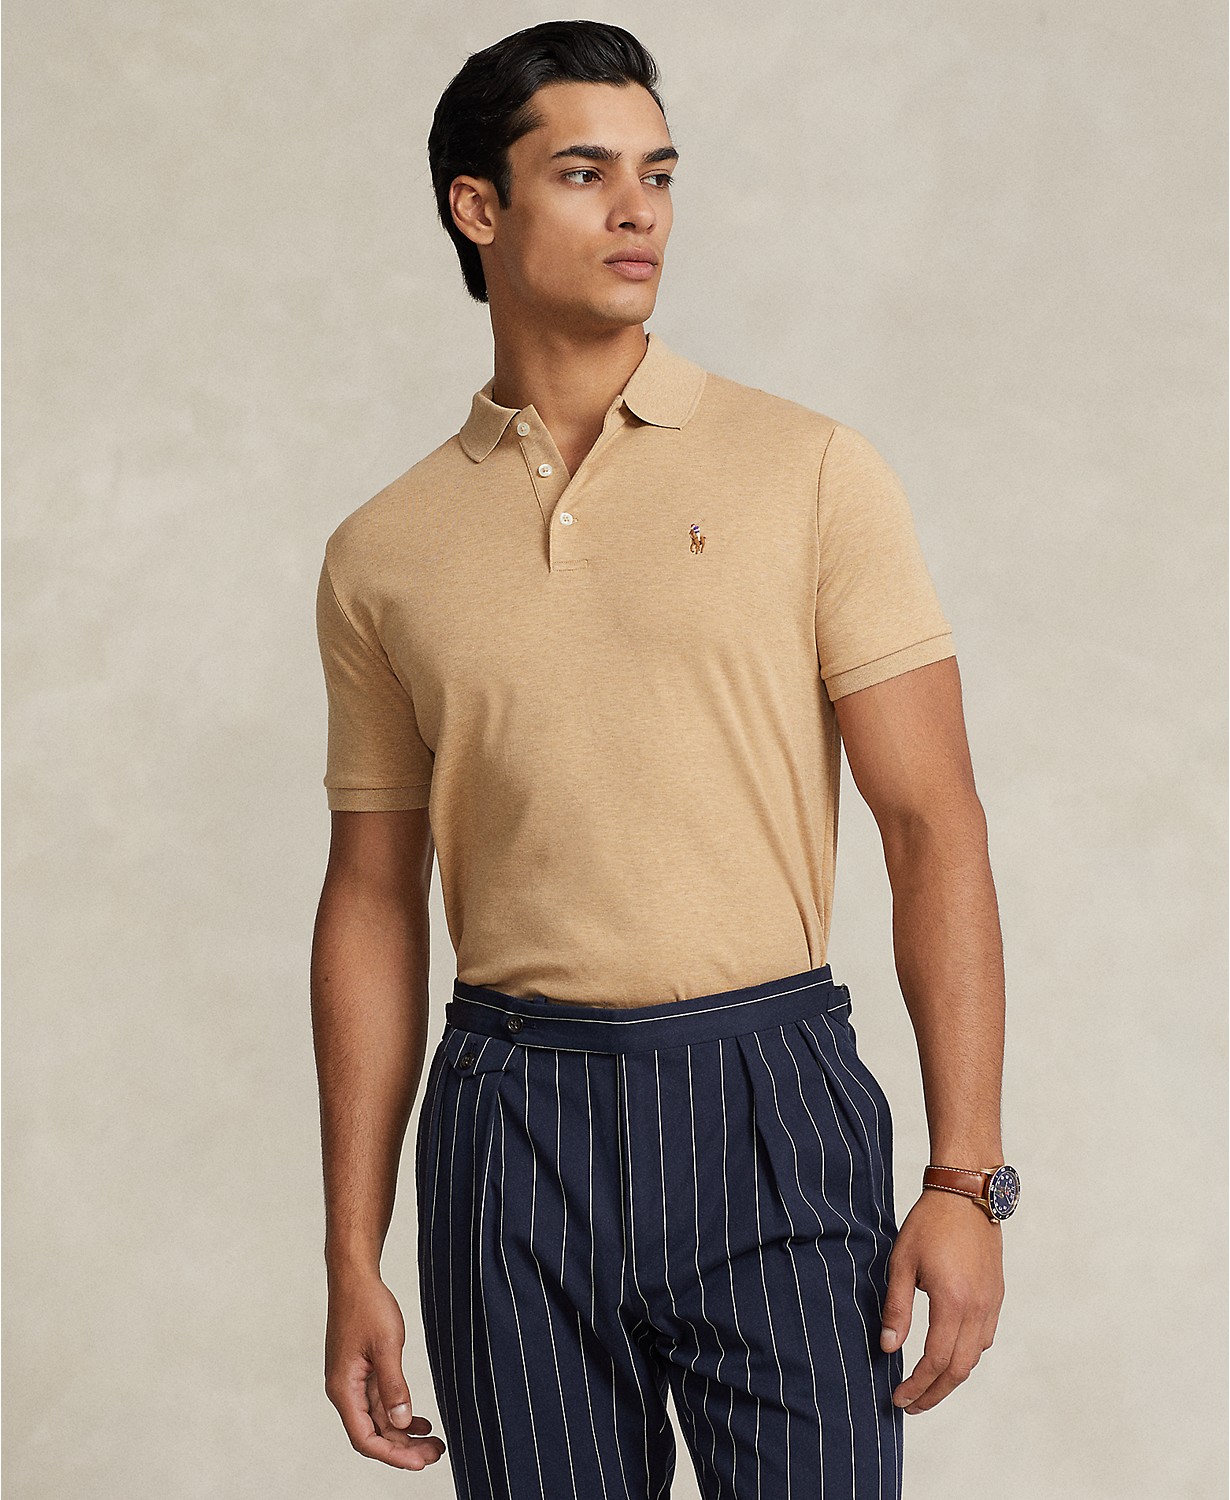 Mens Custom Slim Fit Soft Cotton Polo Shirt